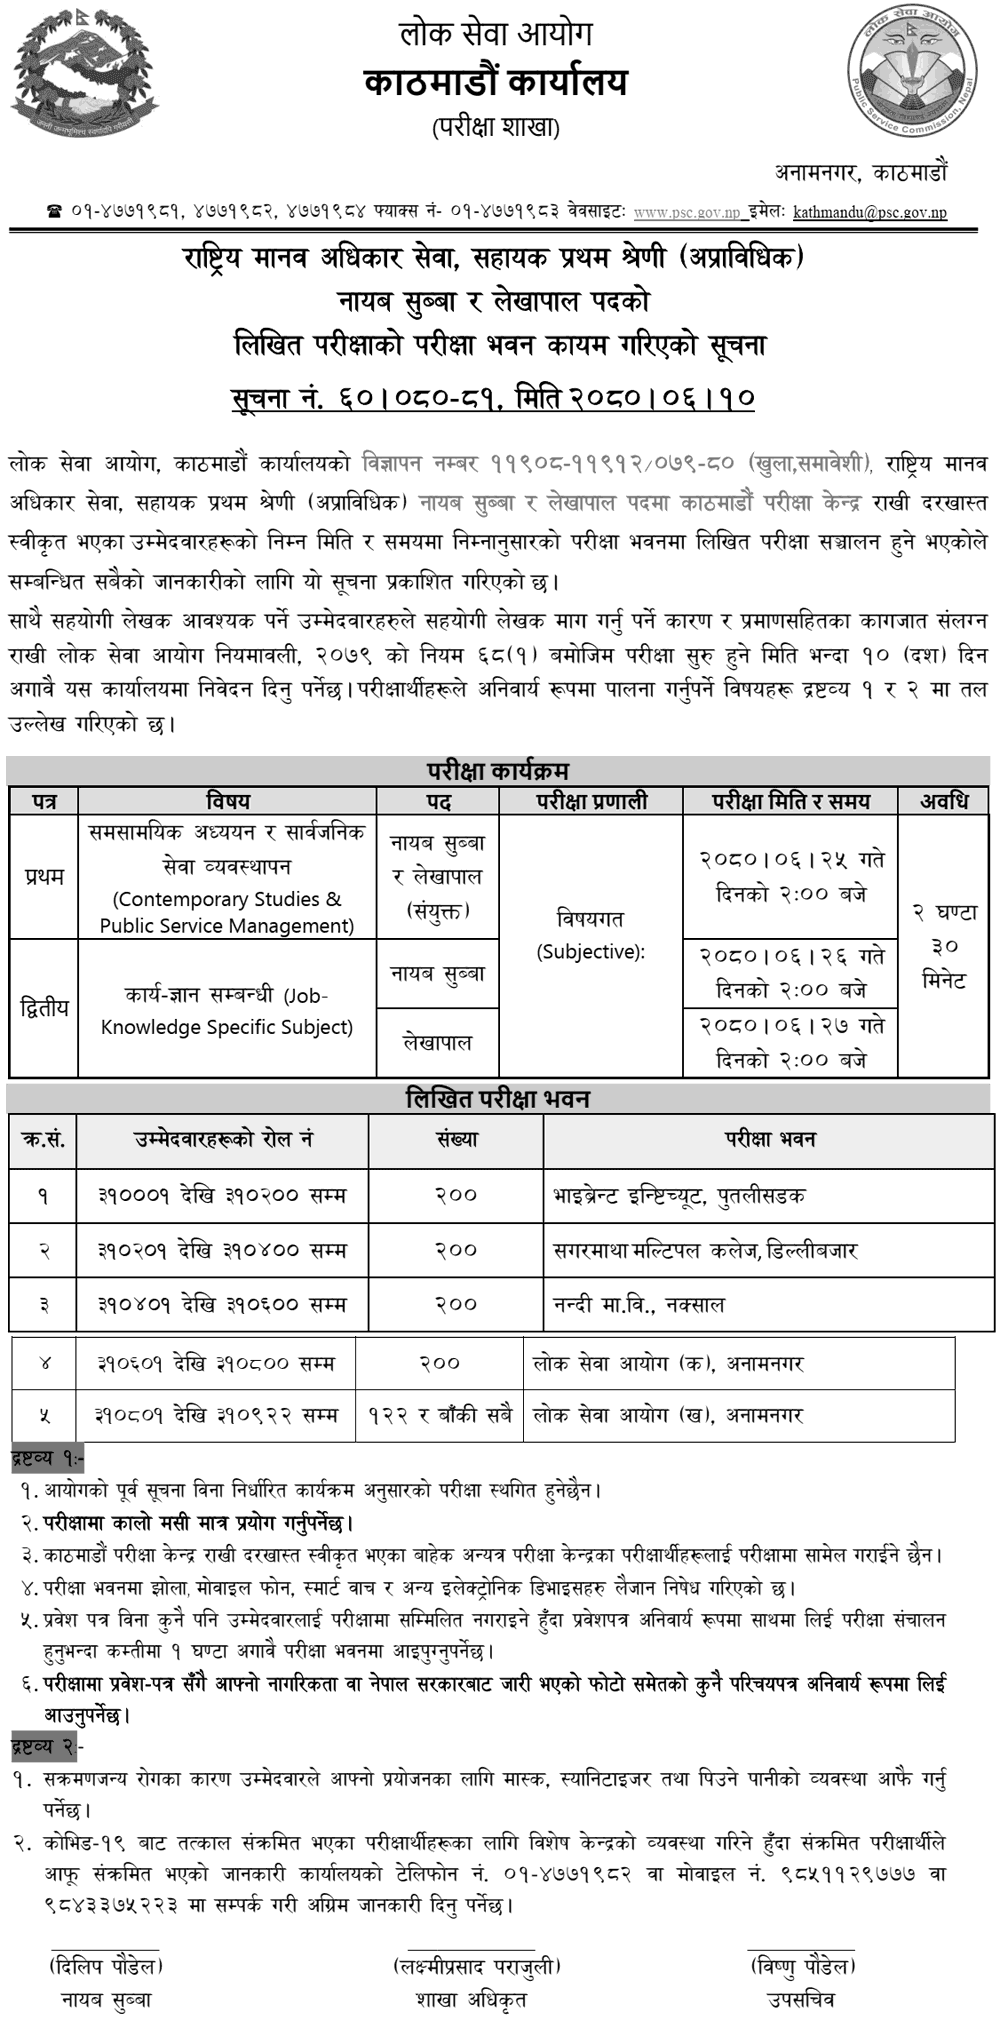 Lok Sewa Aayog Kathmandu Written Exam Center of Nayab Subba and Lekhapal 2080